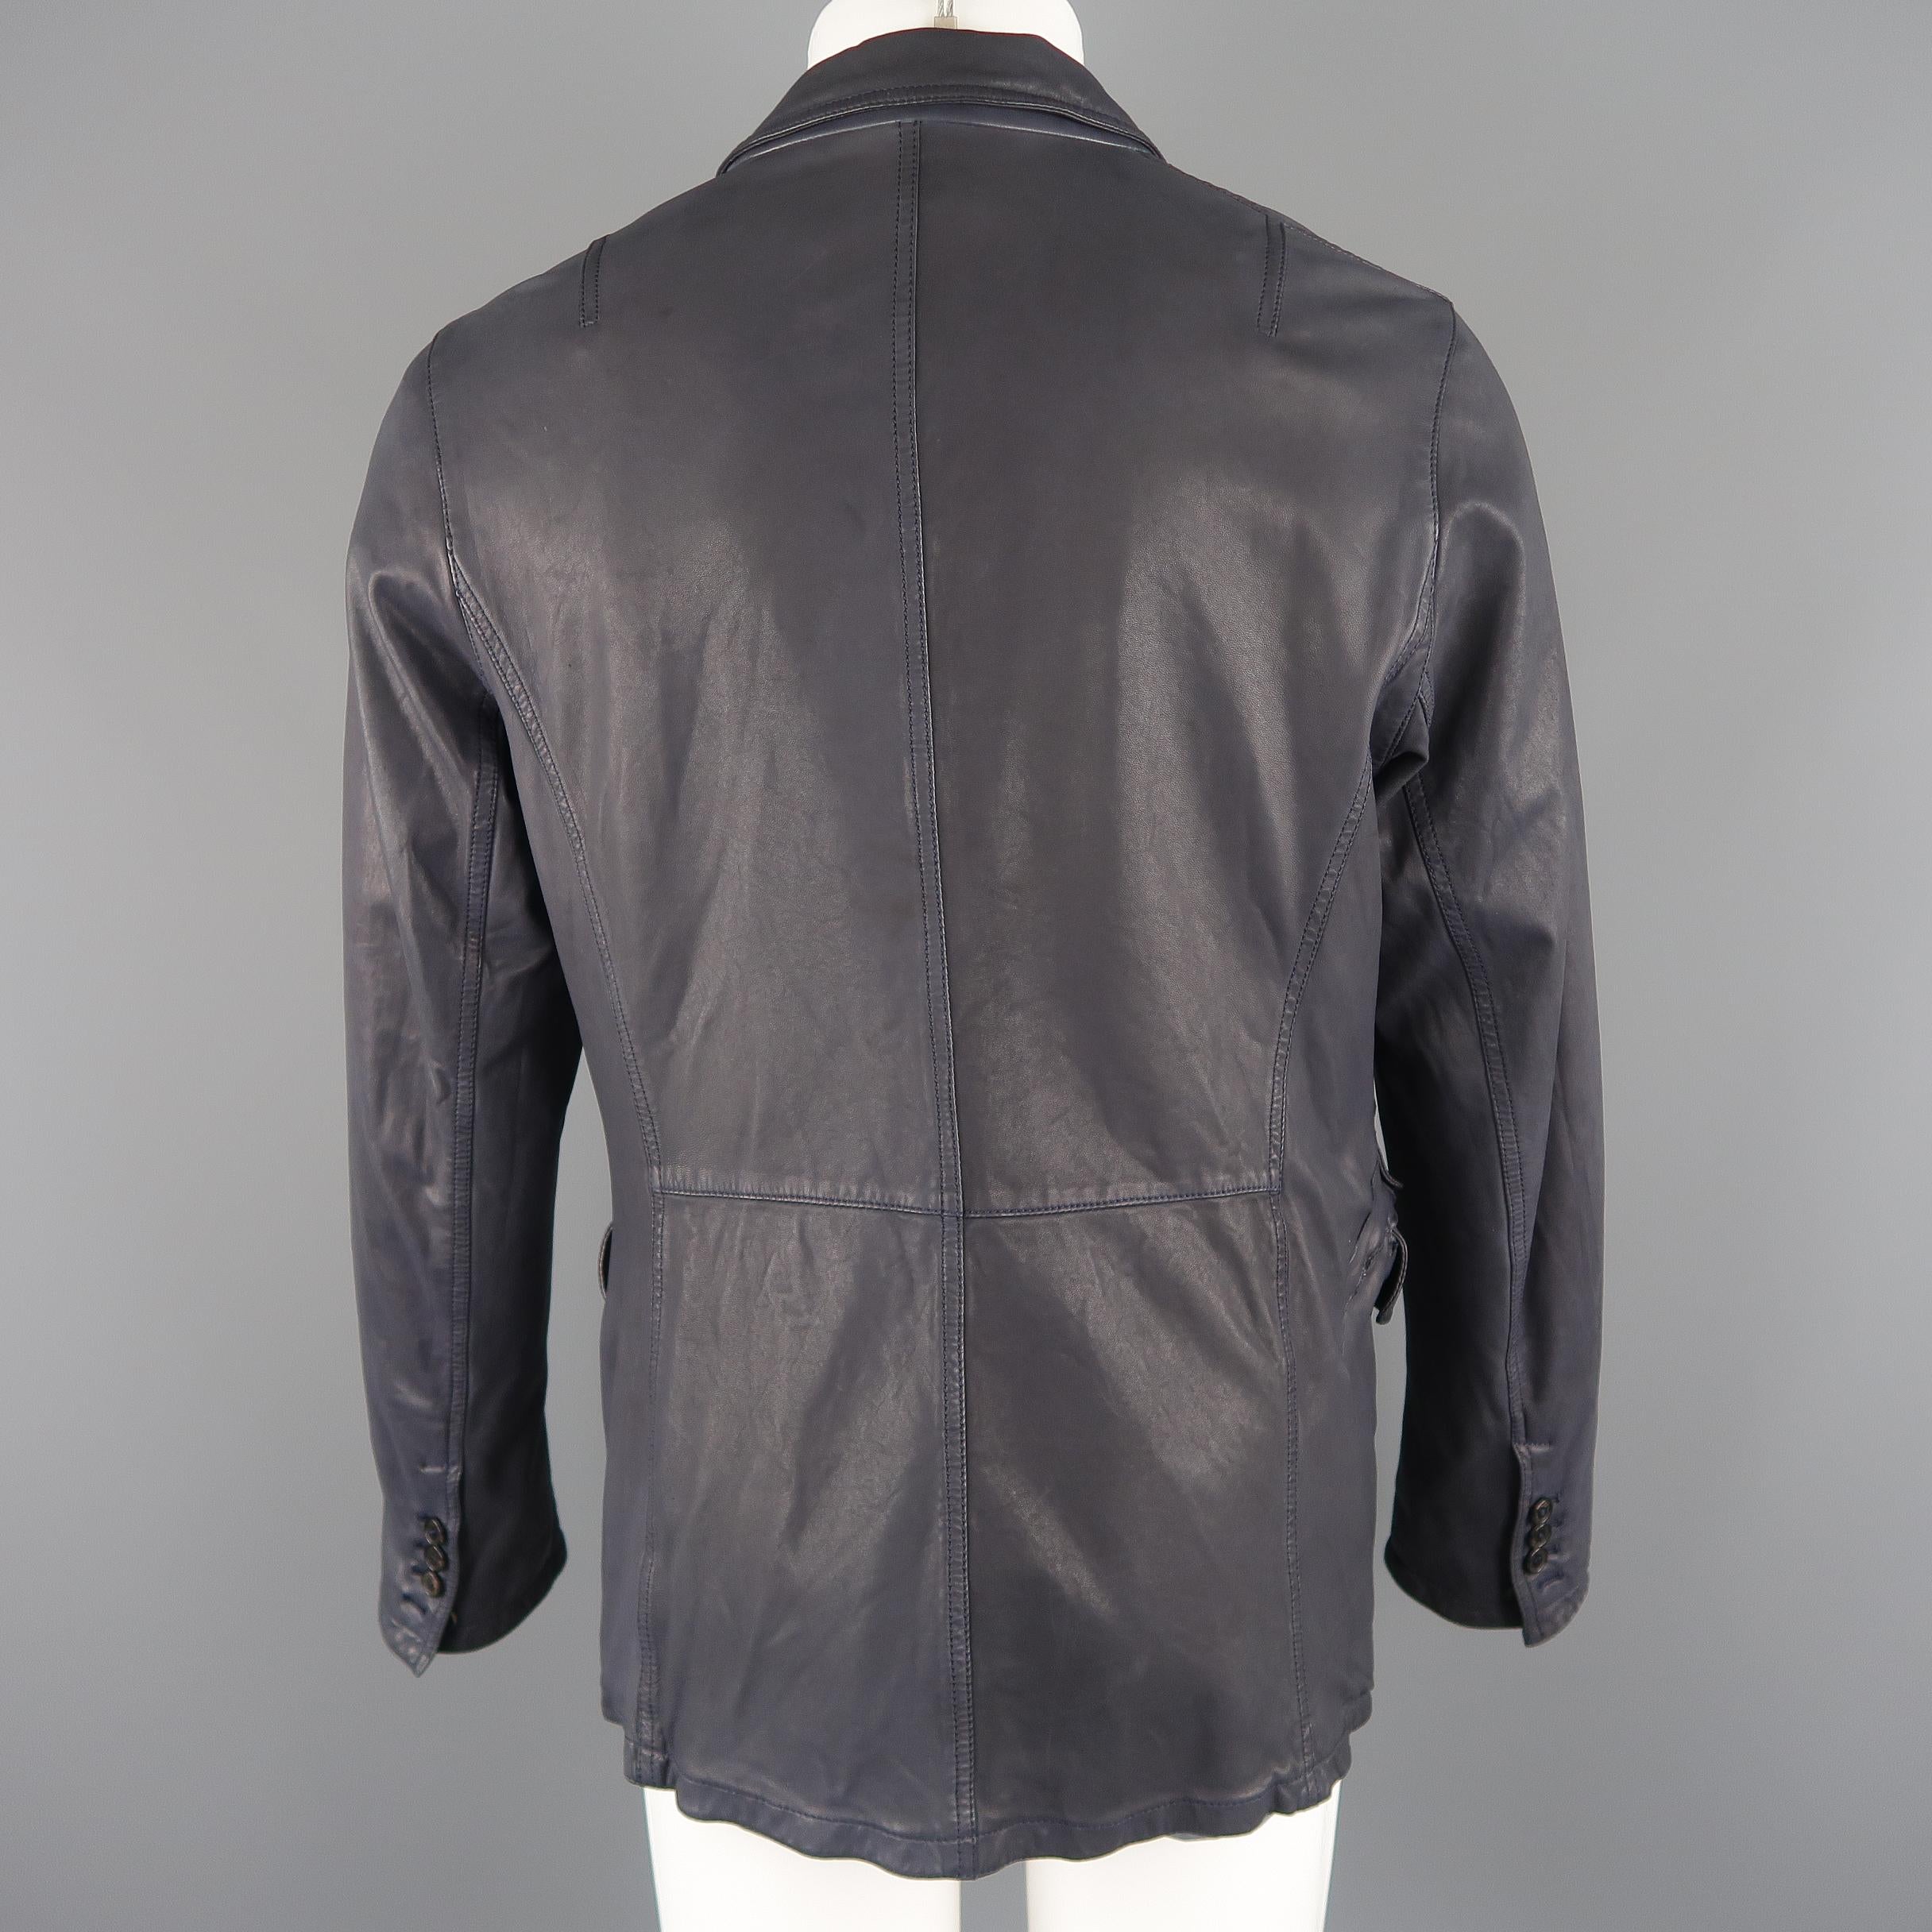 NEIL BARRETT Jacket M Navy Leather Double Breasted Sport Coat Jacket 2